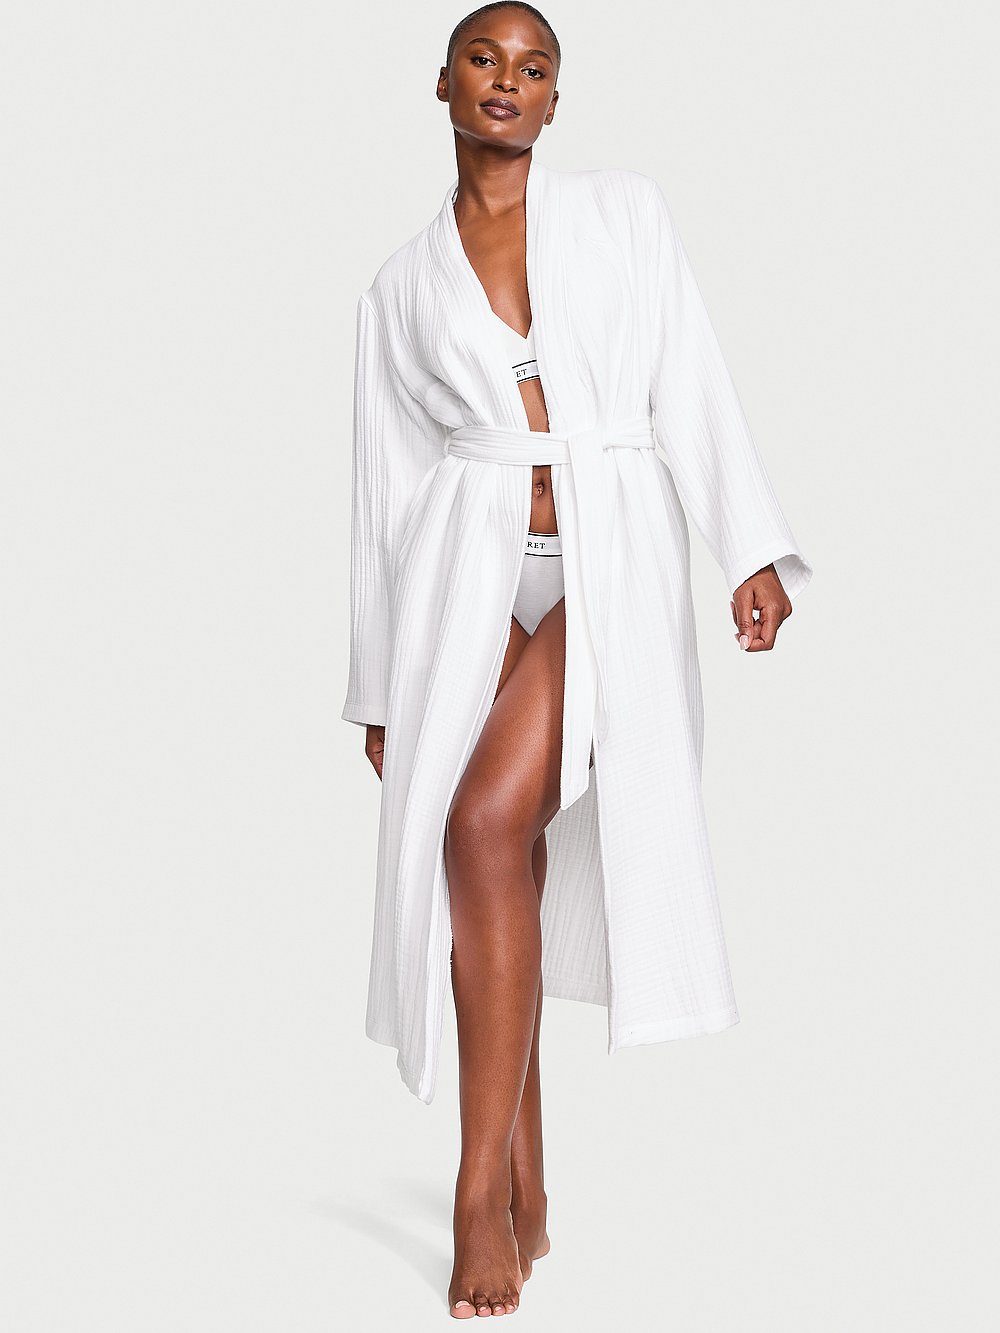 Cotton Gauze Spa Robe Victoria's Secret